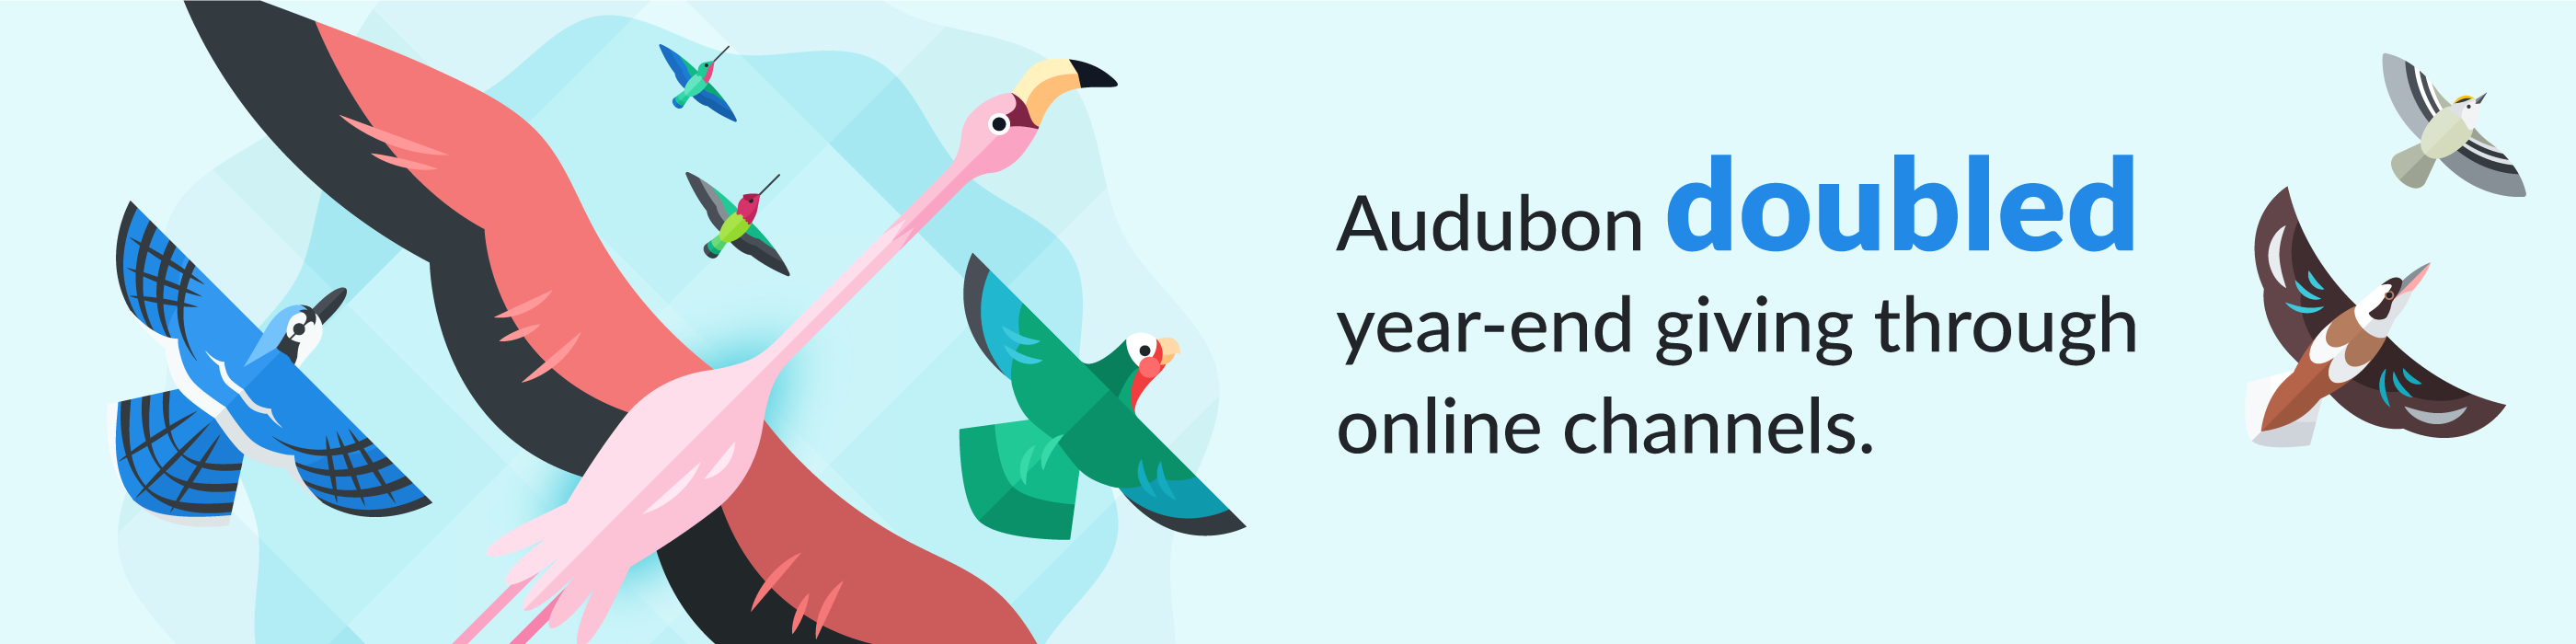 lp-header-audubon-statistic.png